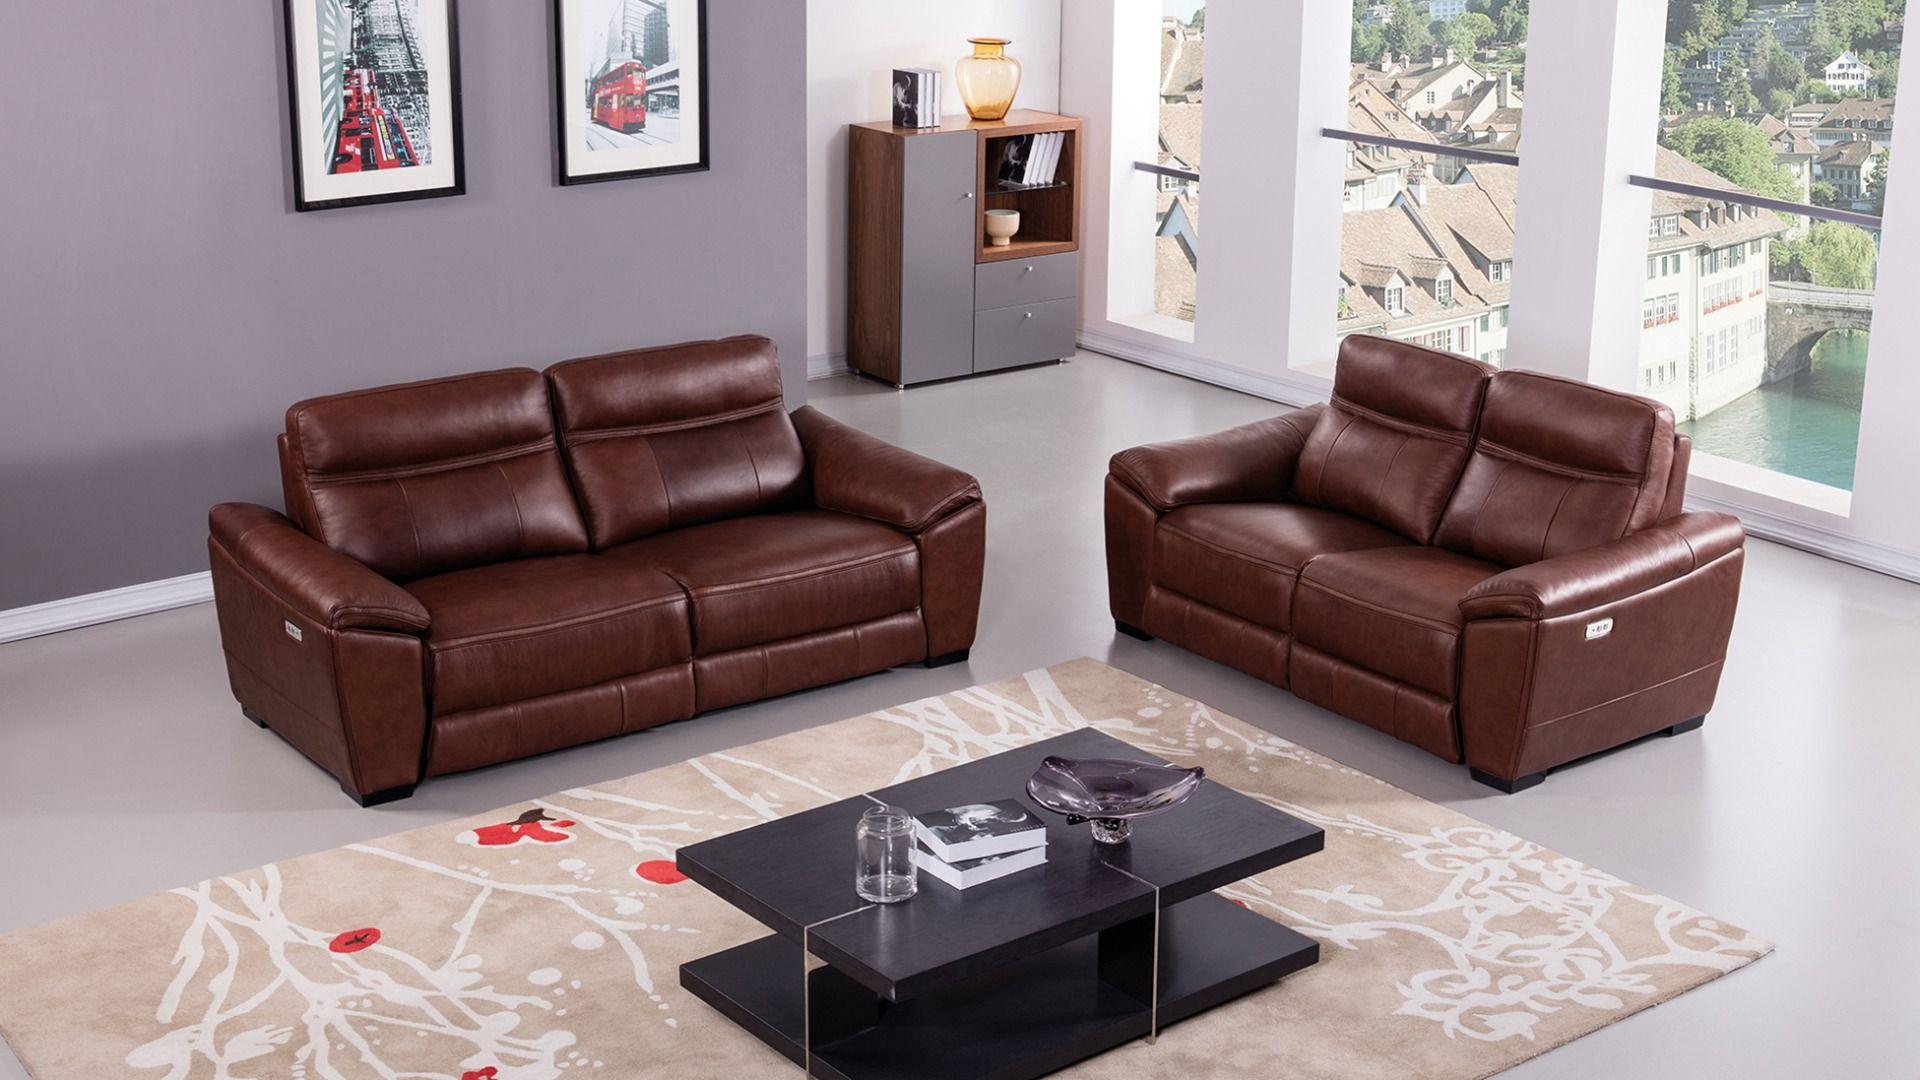 

                    
American Eagle Furniture EK088-BR-LS Recliner Loveseat Brown Italian Leather Purchase 
